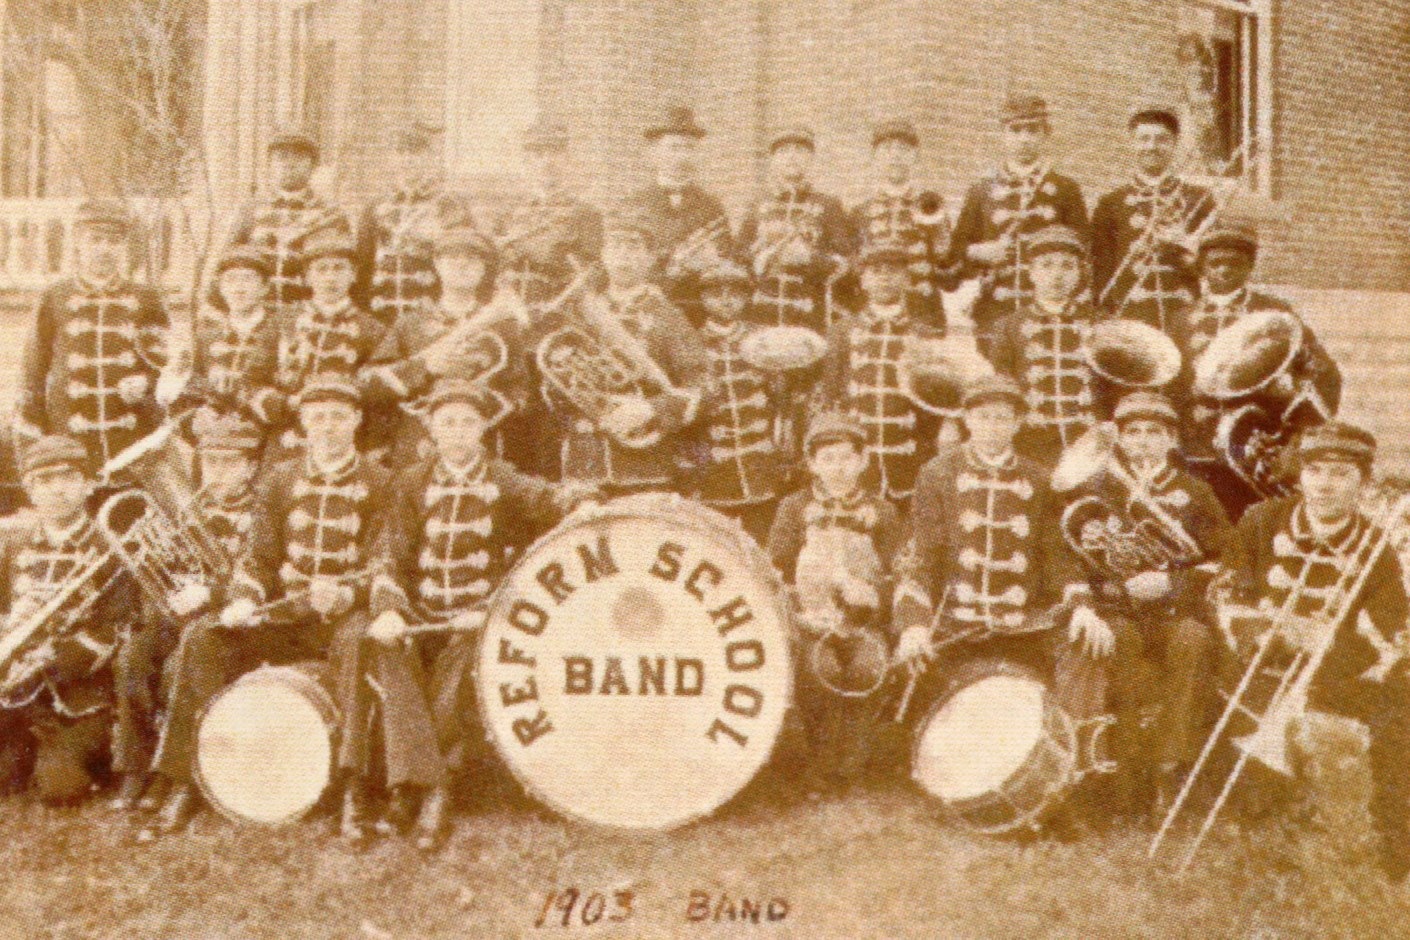 Reform School Band Photo